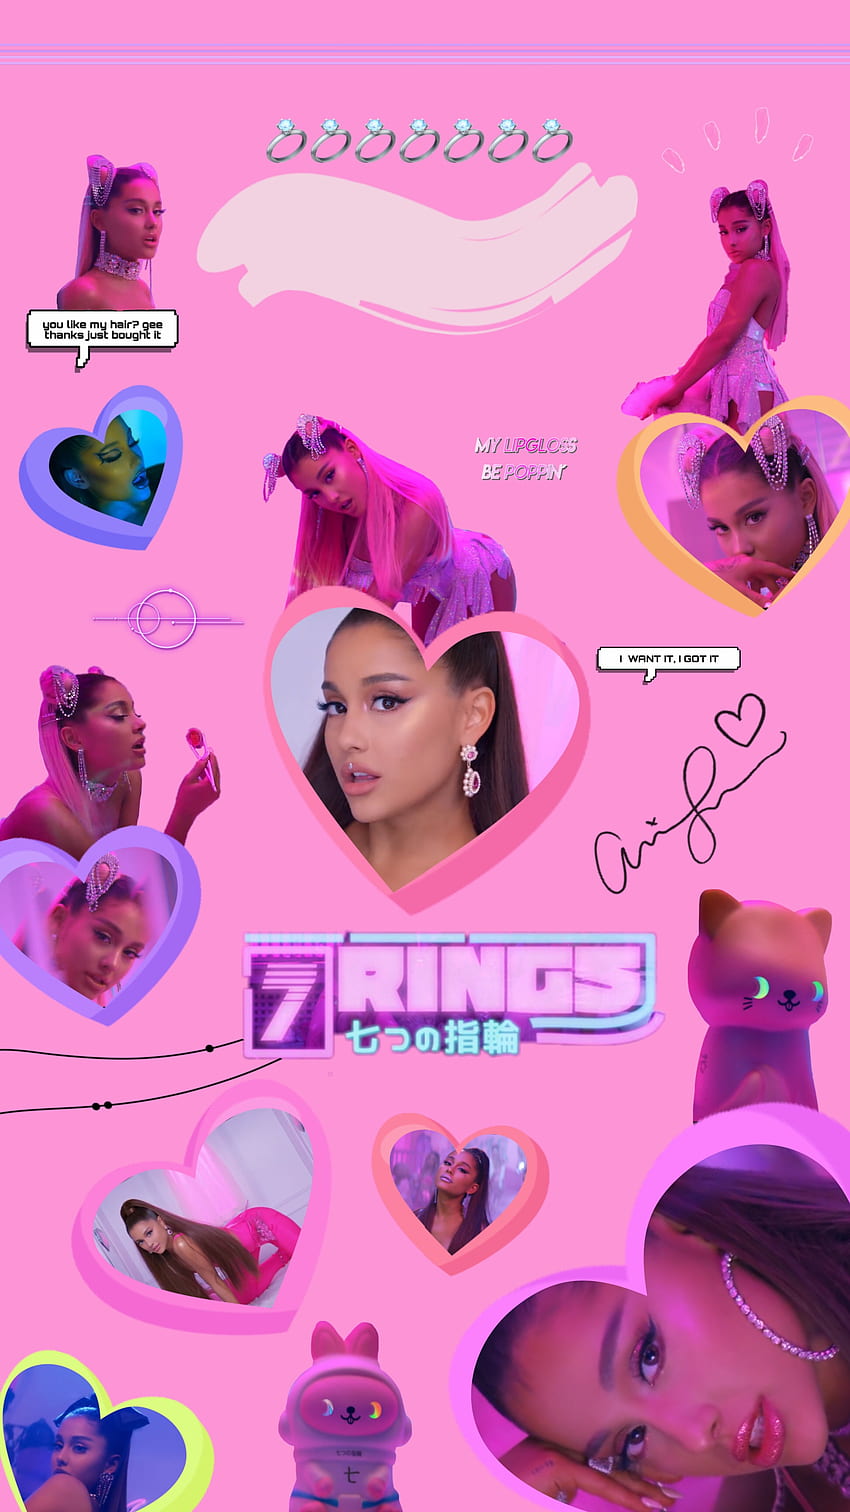 Ariana Grande 7 Rings 壁紙 - 最高の画像新しい壁紙F HD phone wallpaper